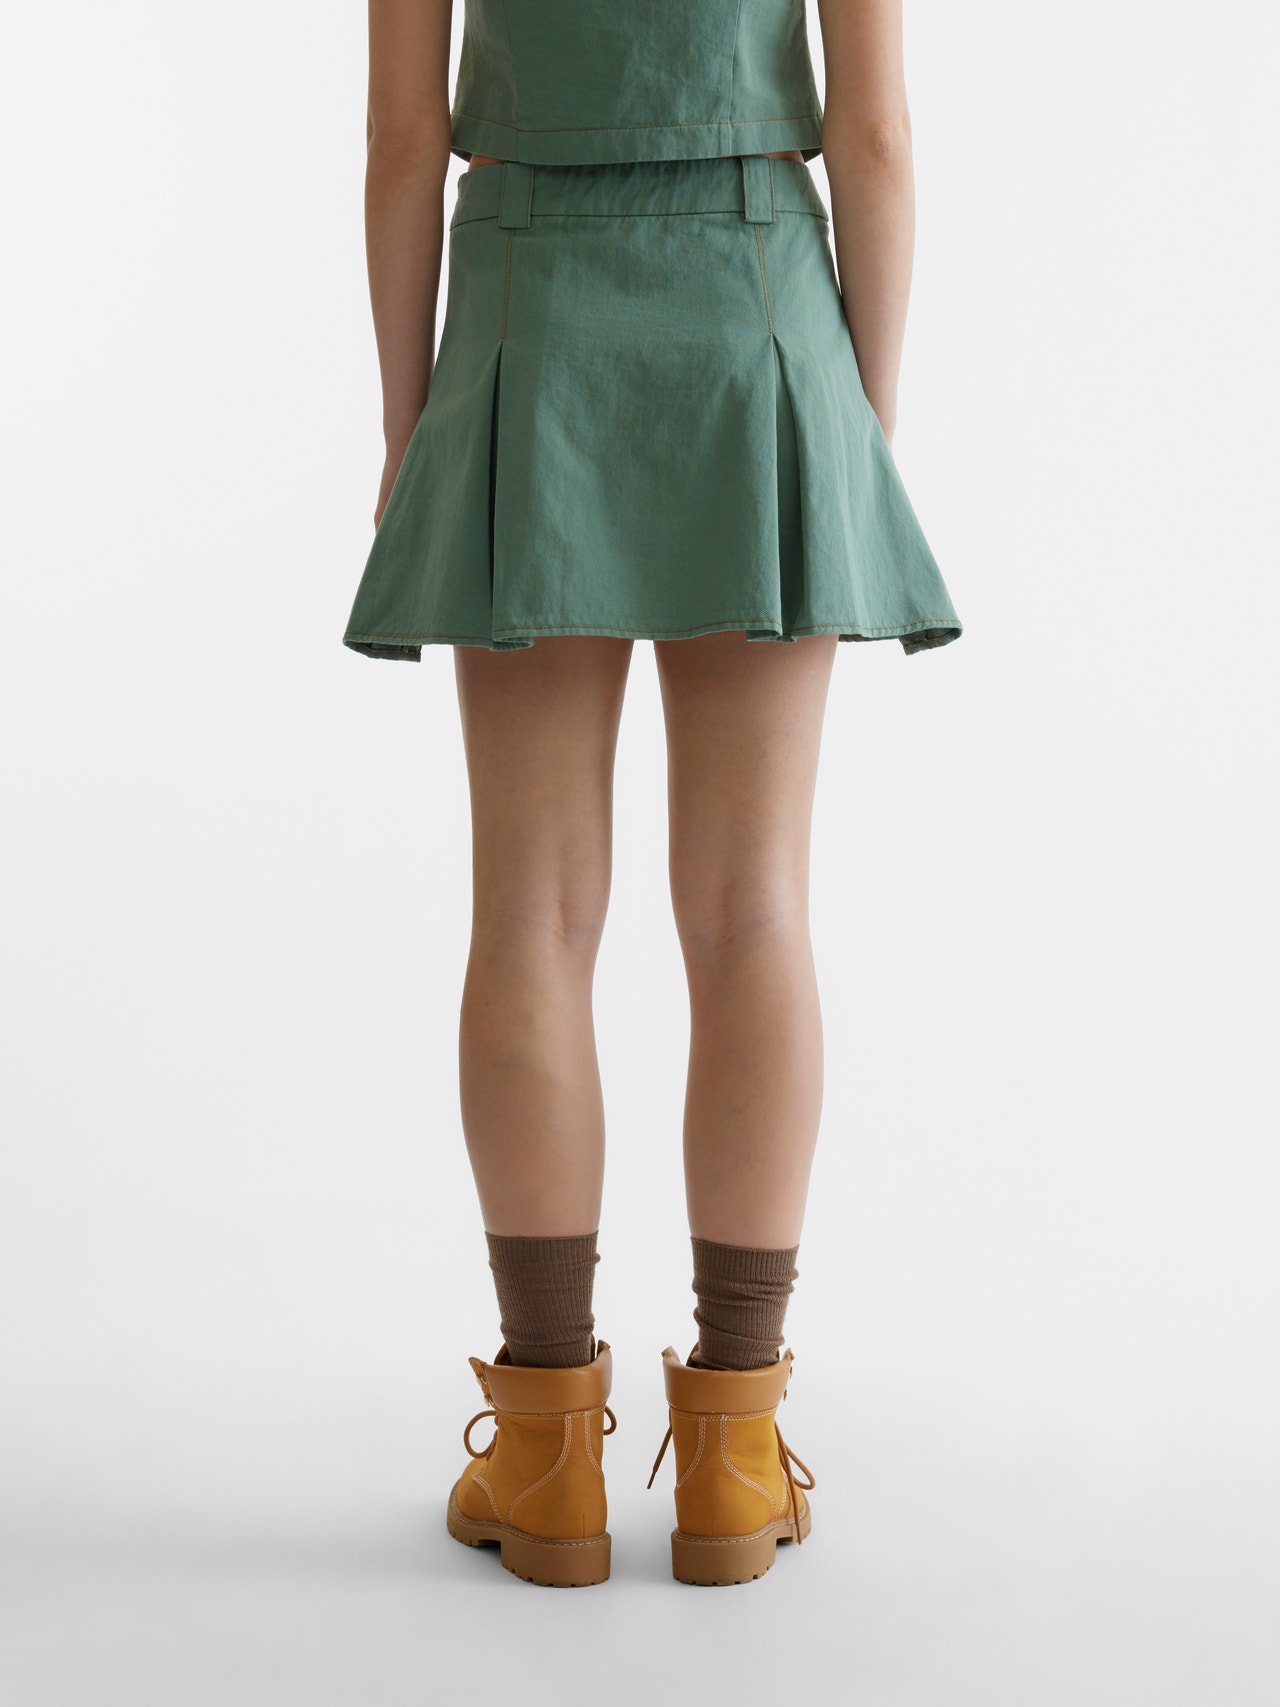 Vero Moda SOMETHING NEW PROJECT; CHLOE FRATER Mini skirt -Watercress - 10306644